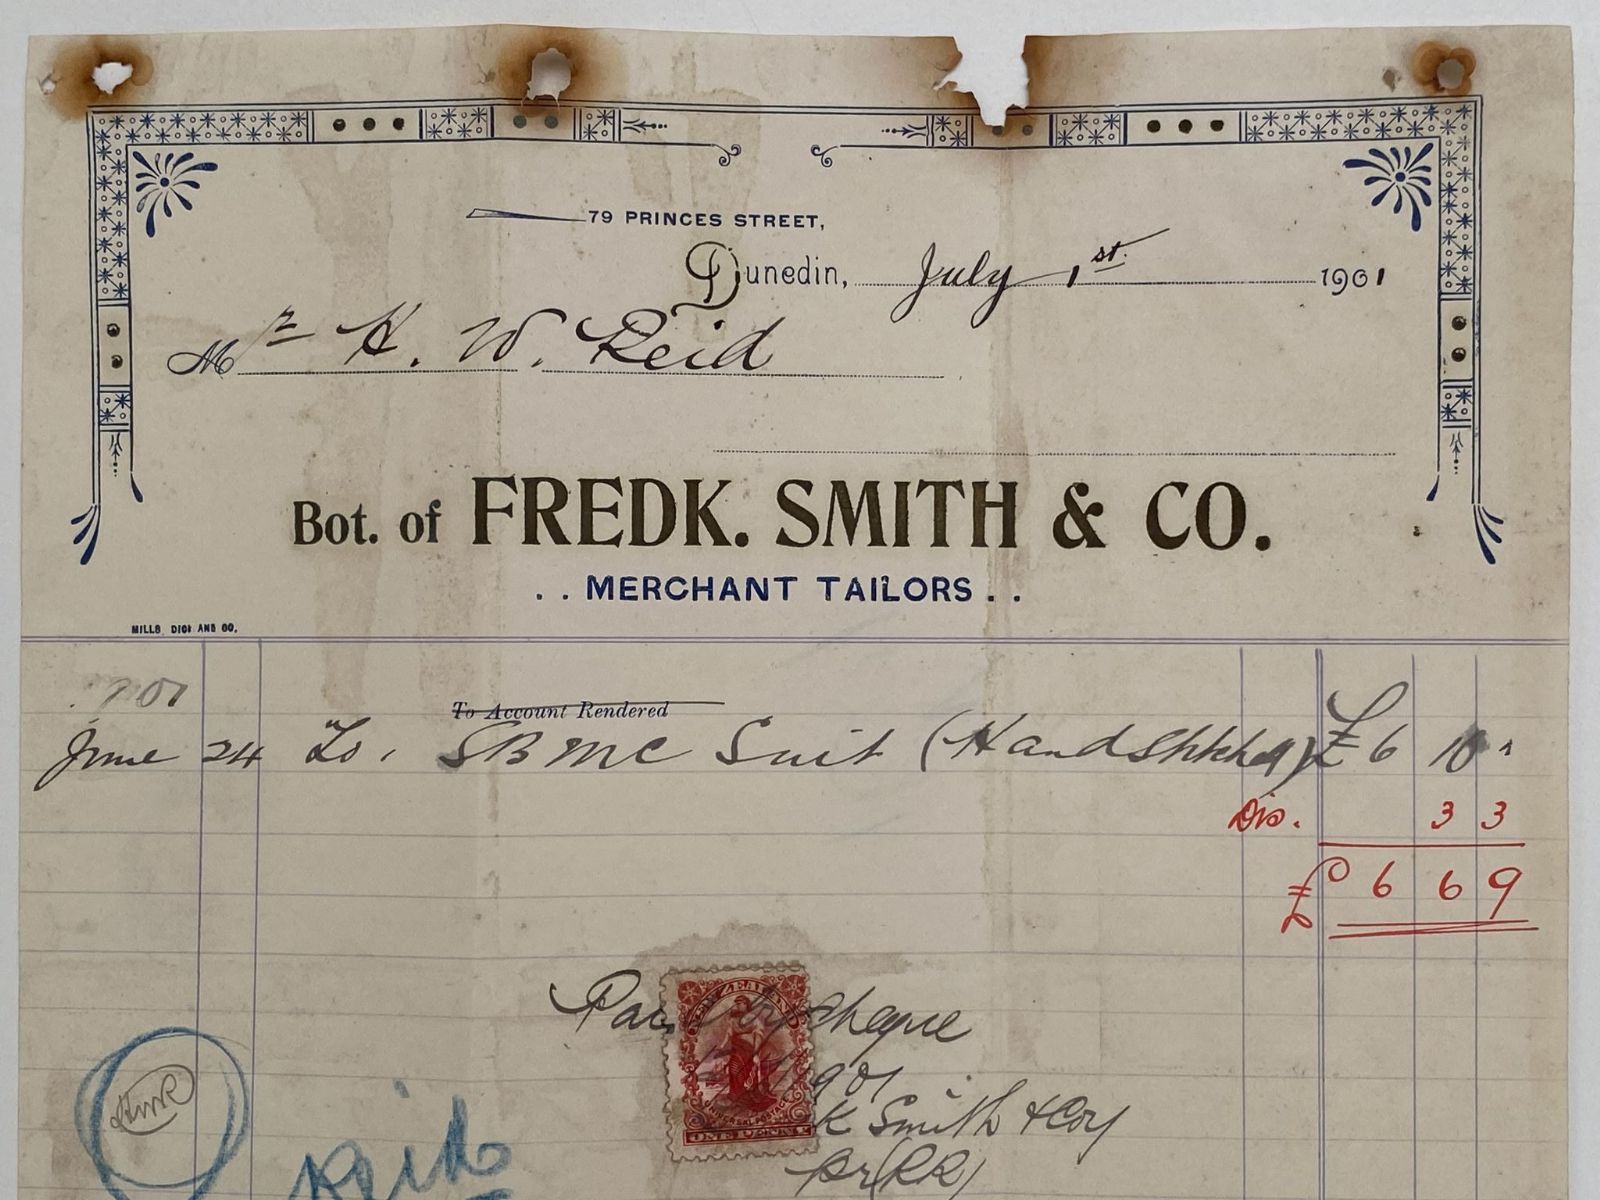 OLD INVOICE: Fredk. Smith & Co. Dunedin - Merchant Tailors 1901 (121 yo)